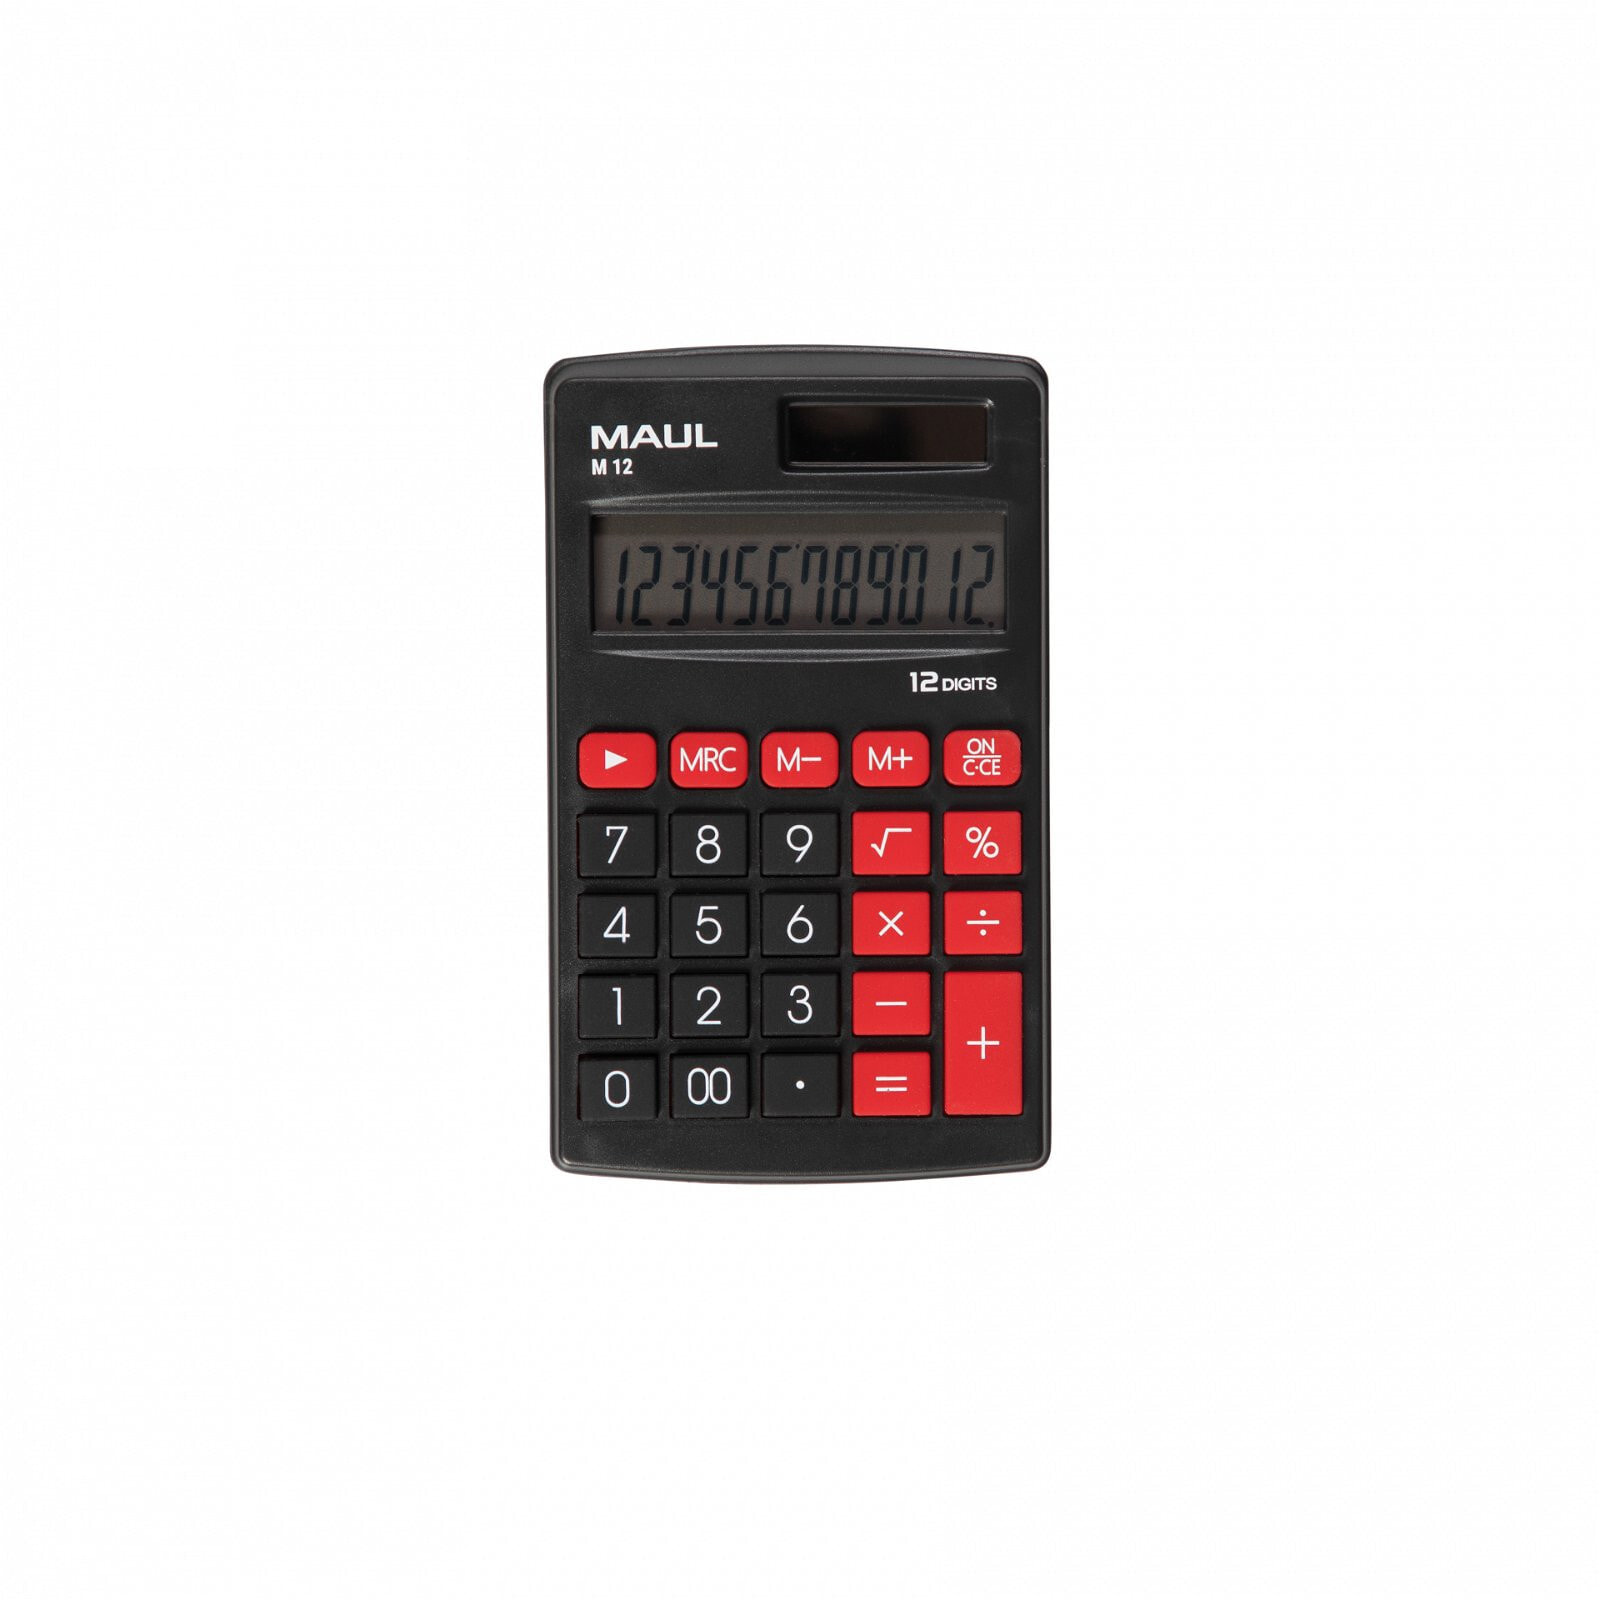 MAUL M 12 - Pocket - Display - 12 digits - 1 lines - Battery/Solar - Black - Red